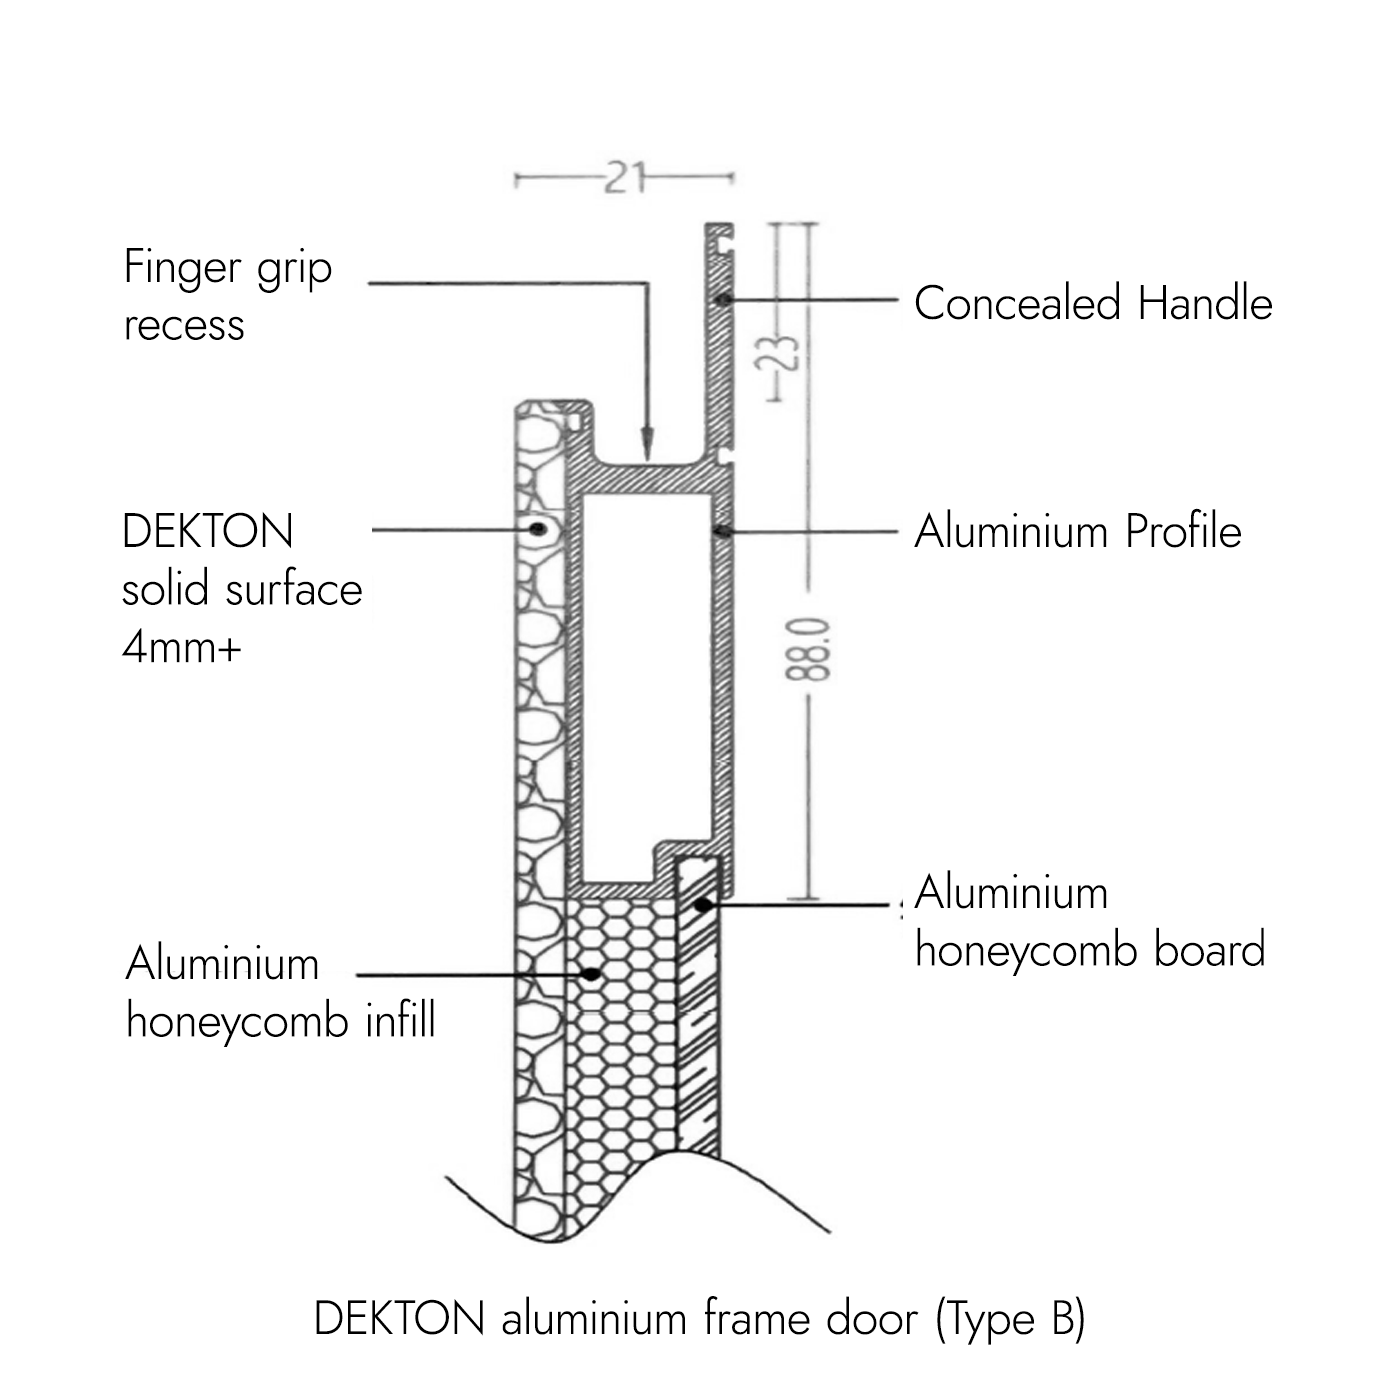 【DEKTON】 Custom-made Door front with 4mm Dekton Solid Surface | Made in Spain |